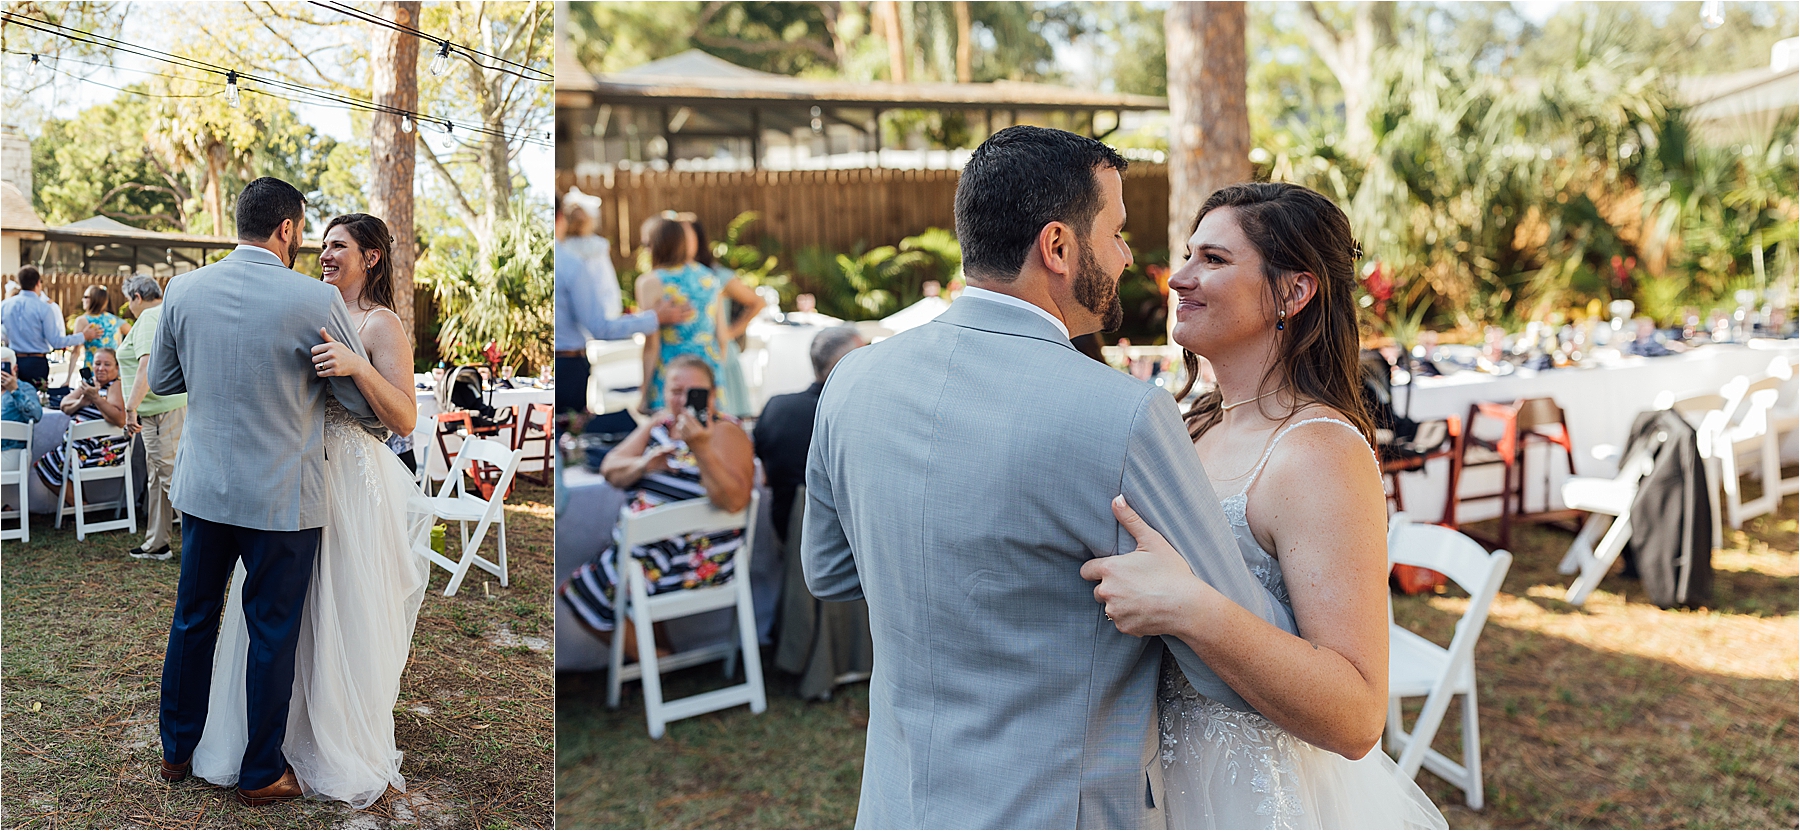 Tampa DIY backyard wedding